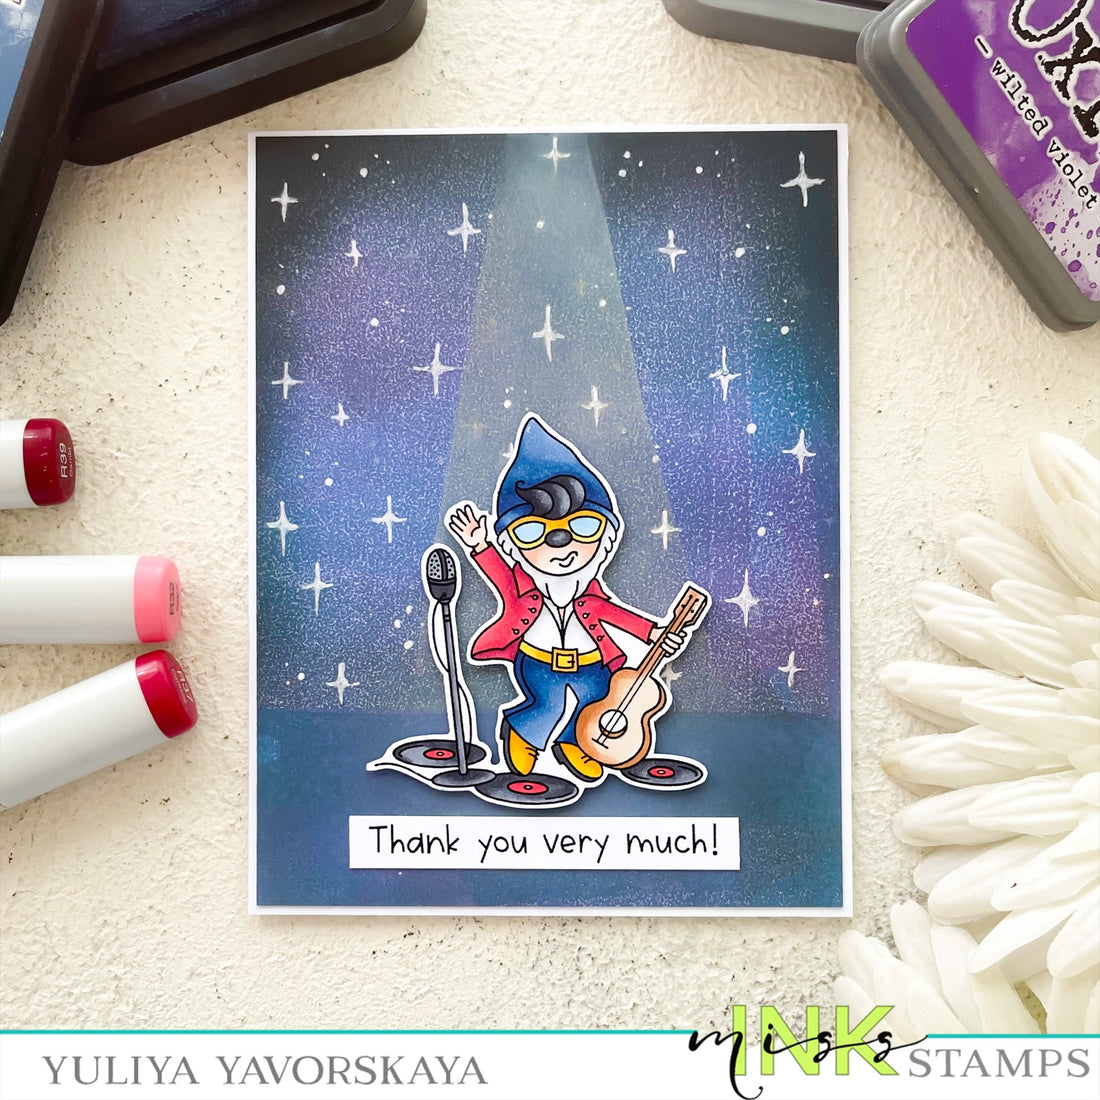 Thank You card with Yuliya Yavorskaya